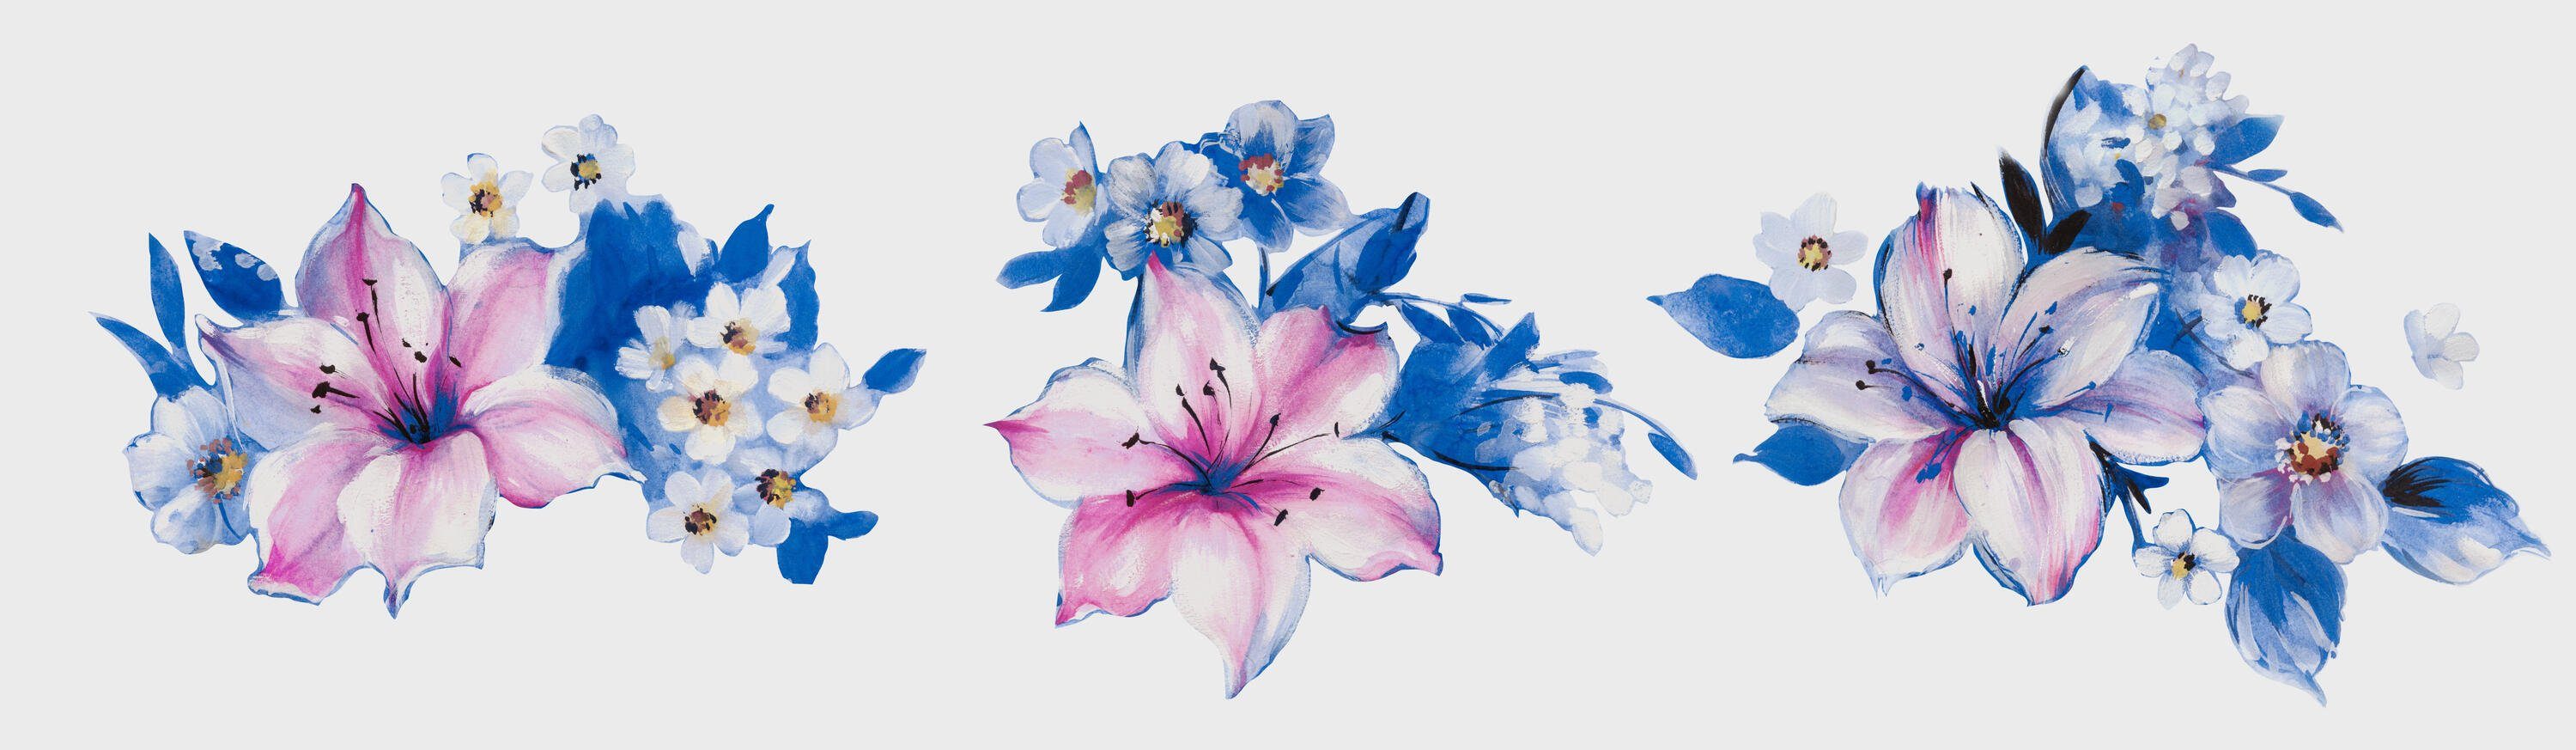 Blumen Wandtapete, Fototapete matt, Muster wandmotiv24 Blau, glatt, Vliestapete Motivtapete,